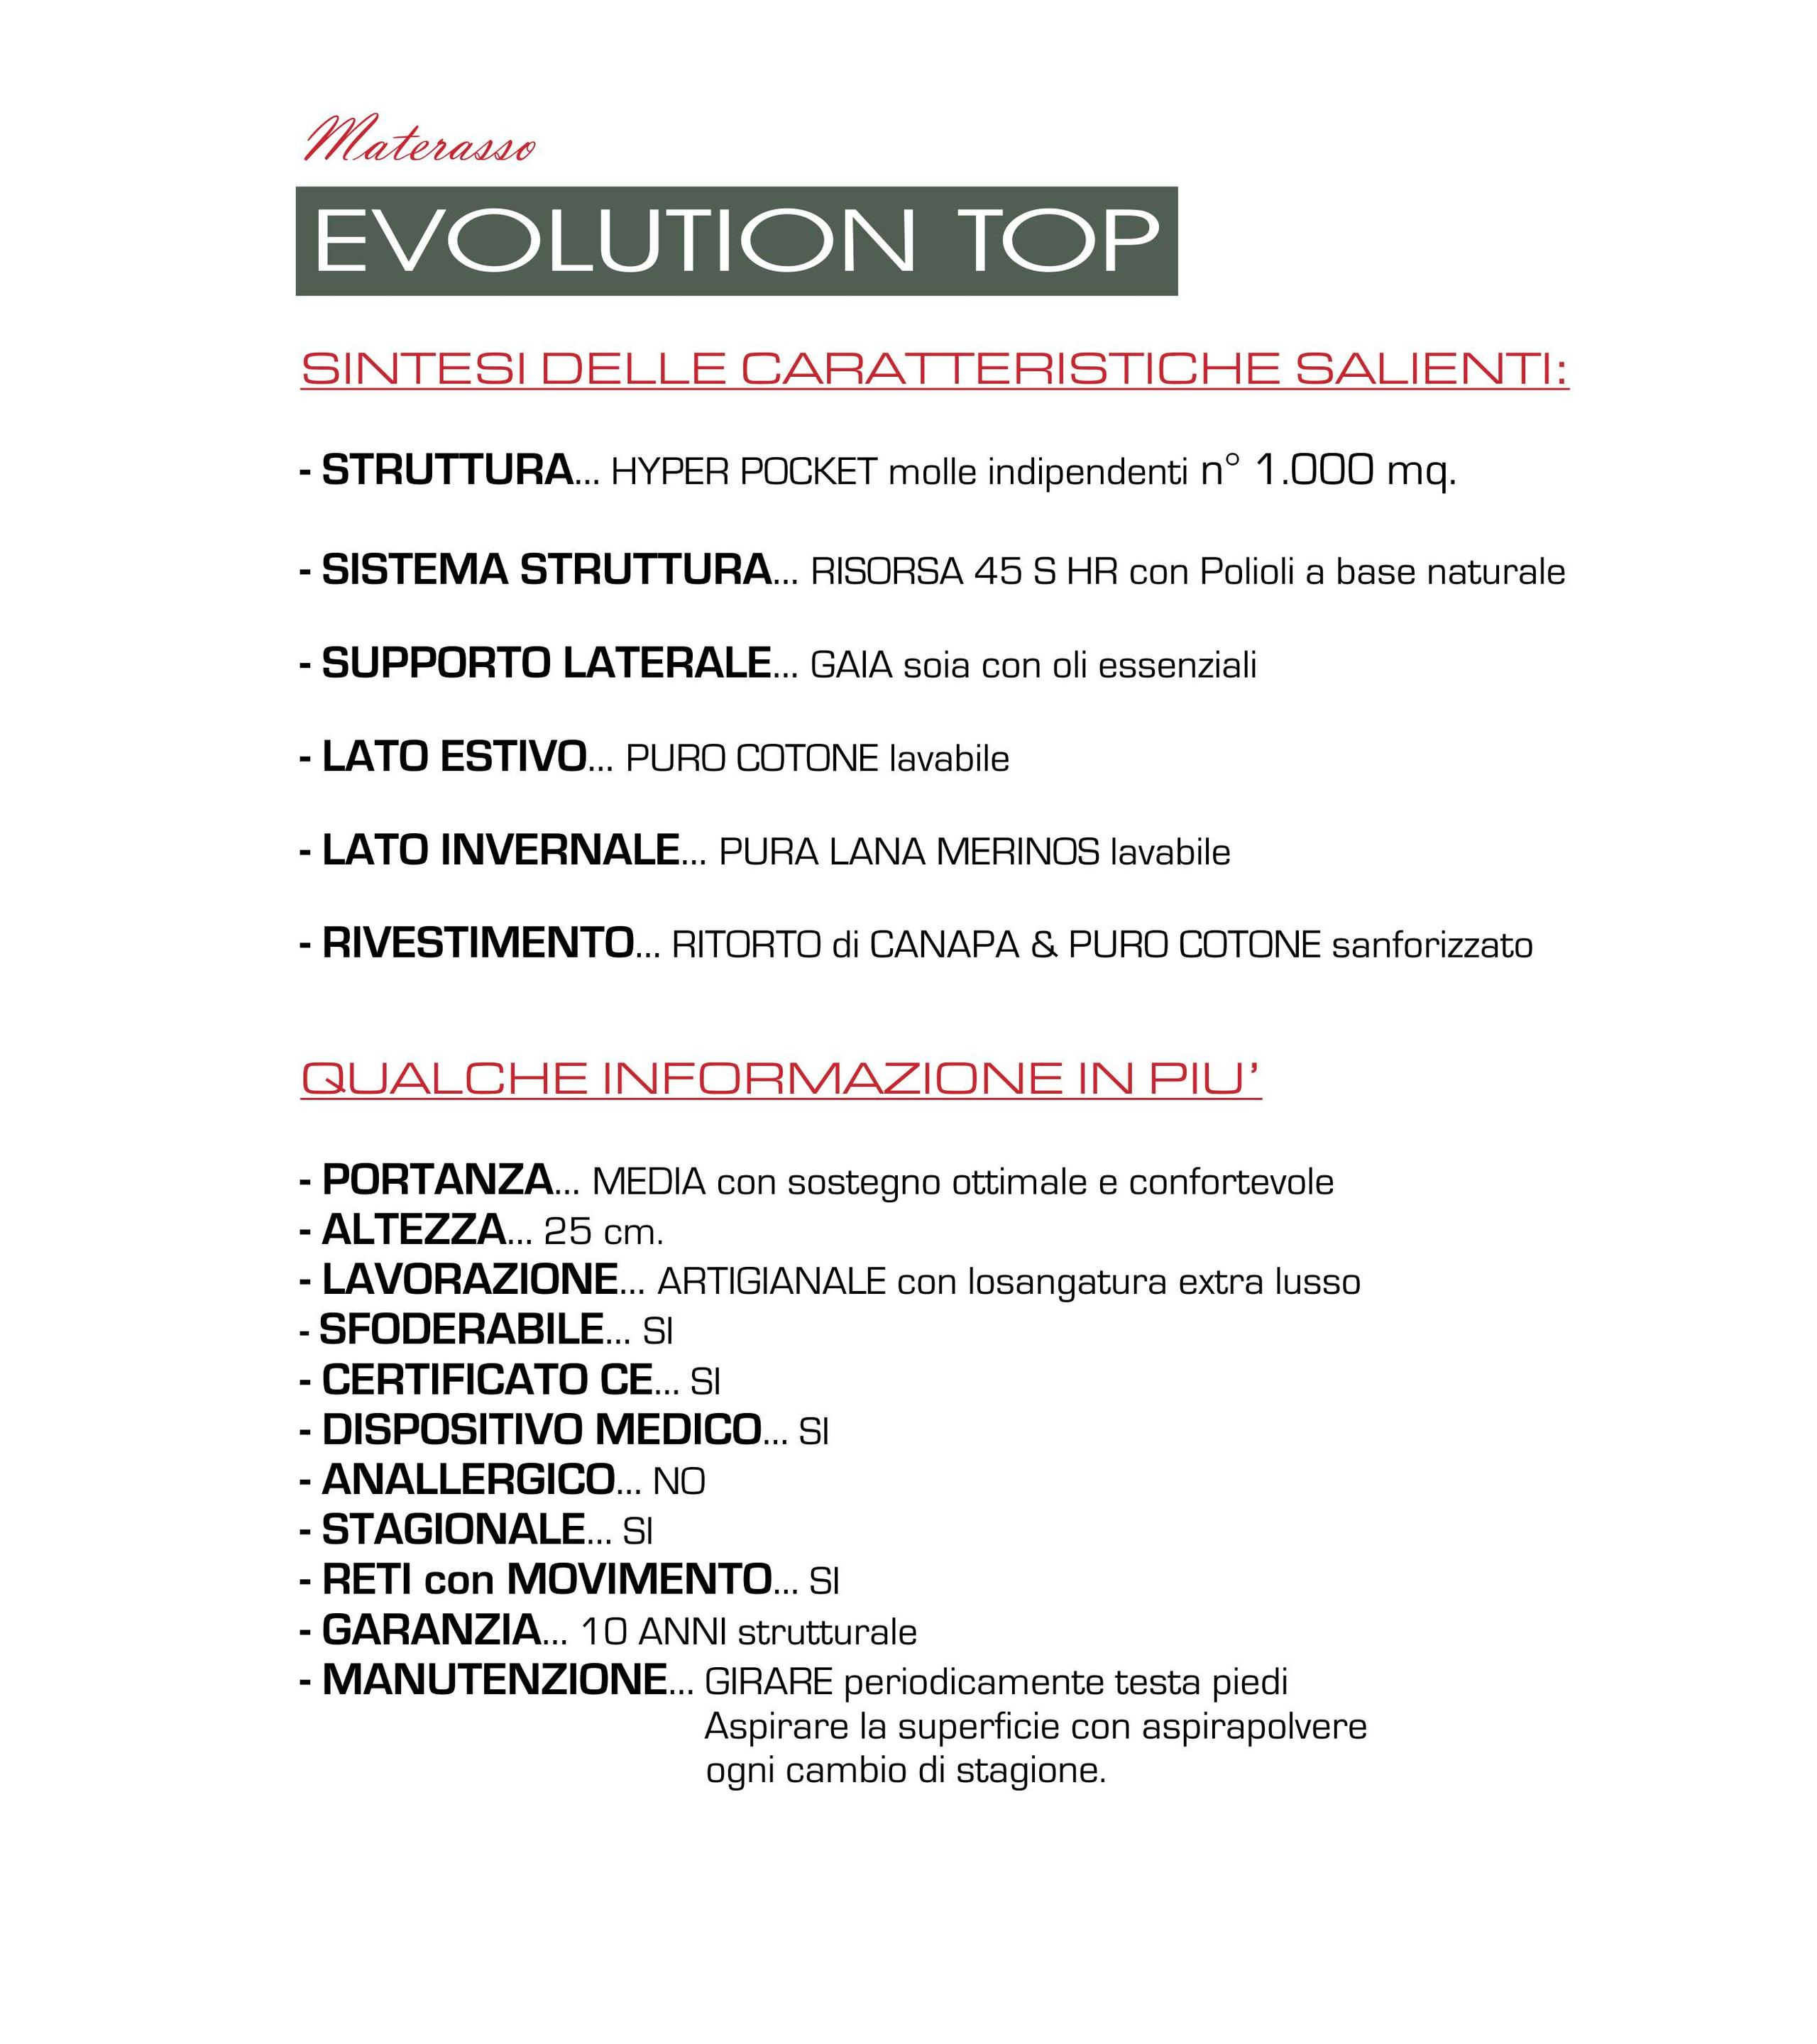 Evolution top